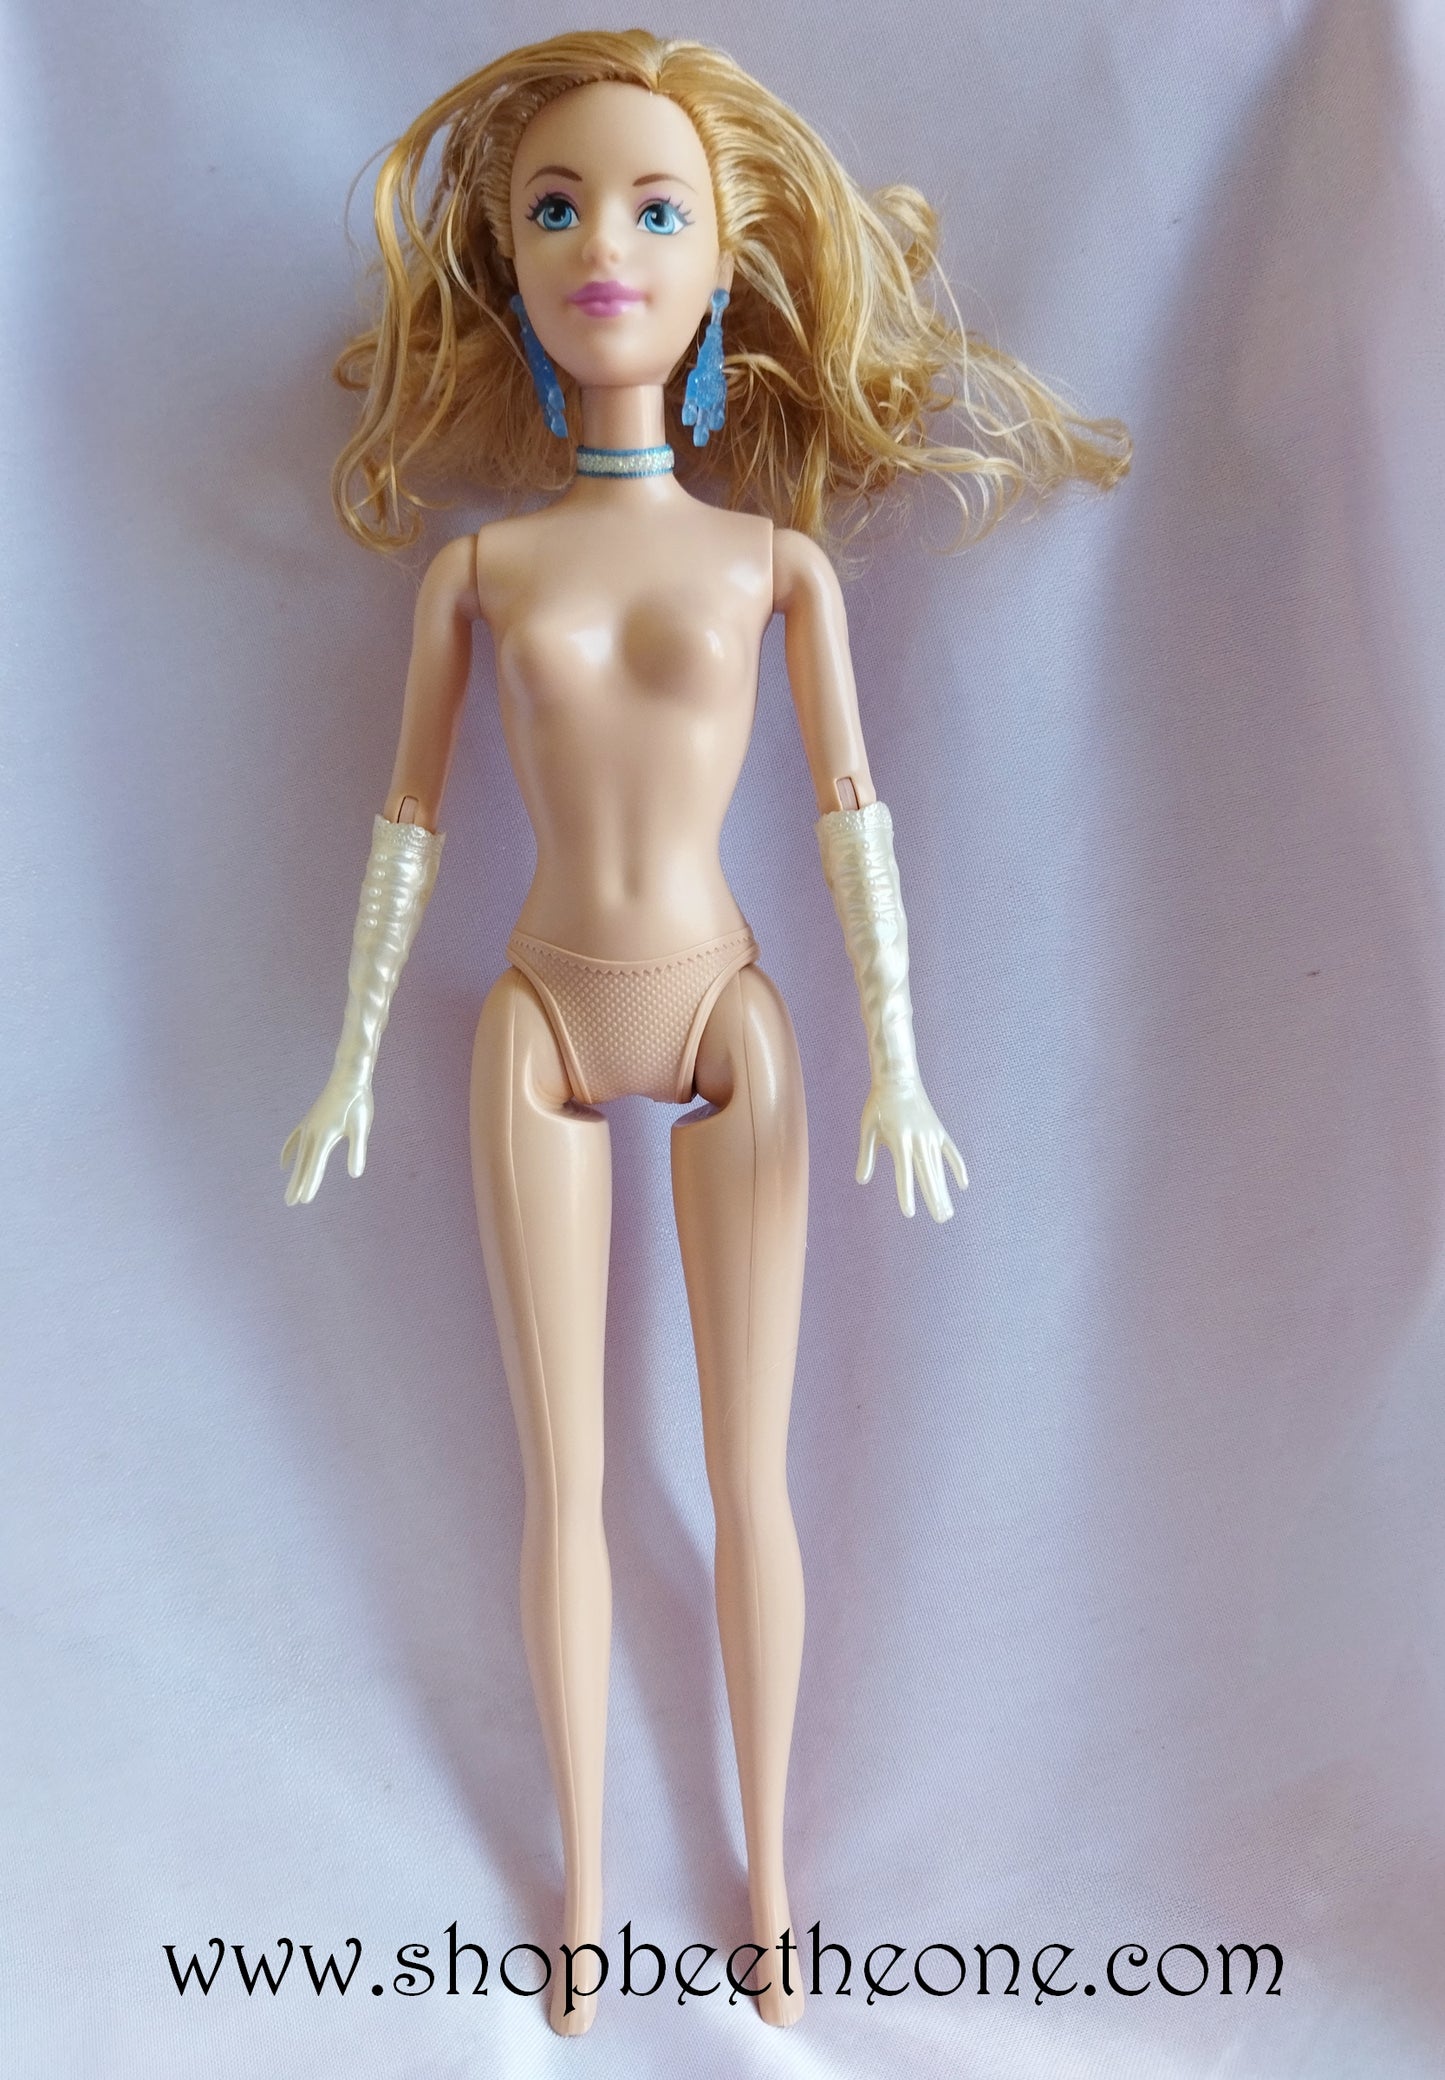 Cendrillon Holiday Princess (Cinderella Holiday Princess) - Mattel 2012 - Poupée